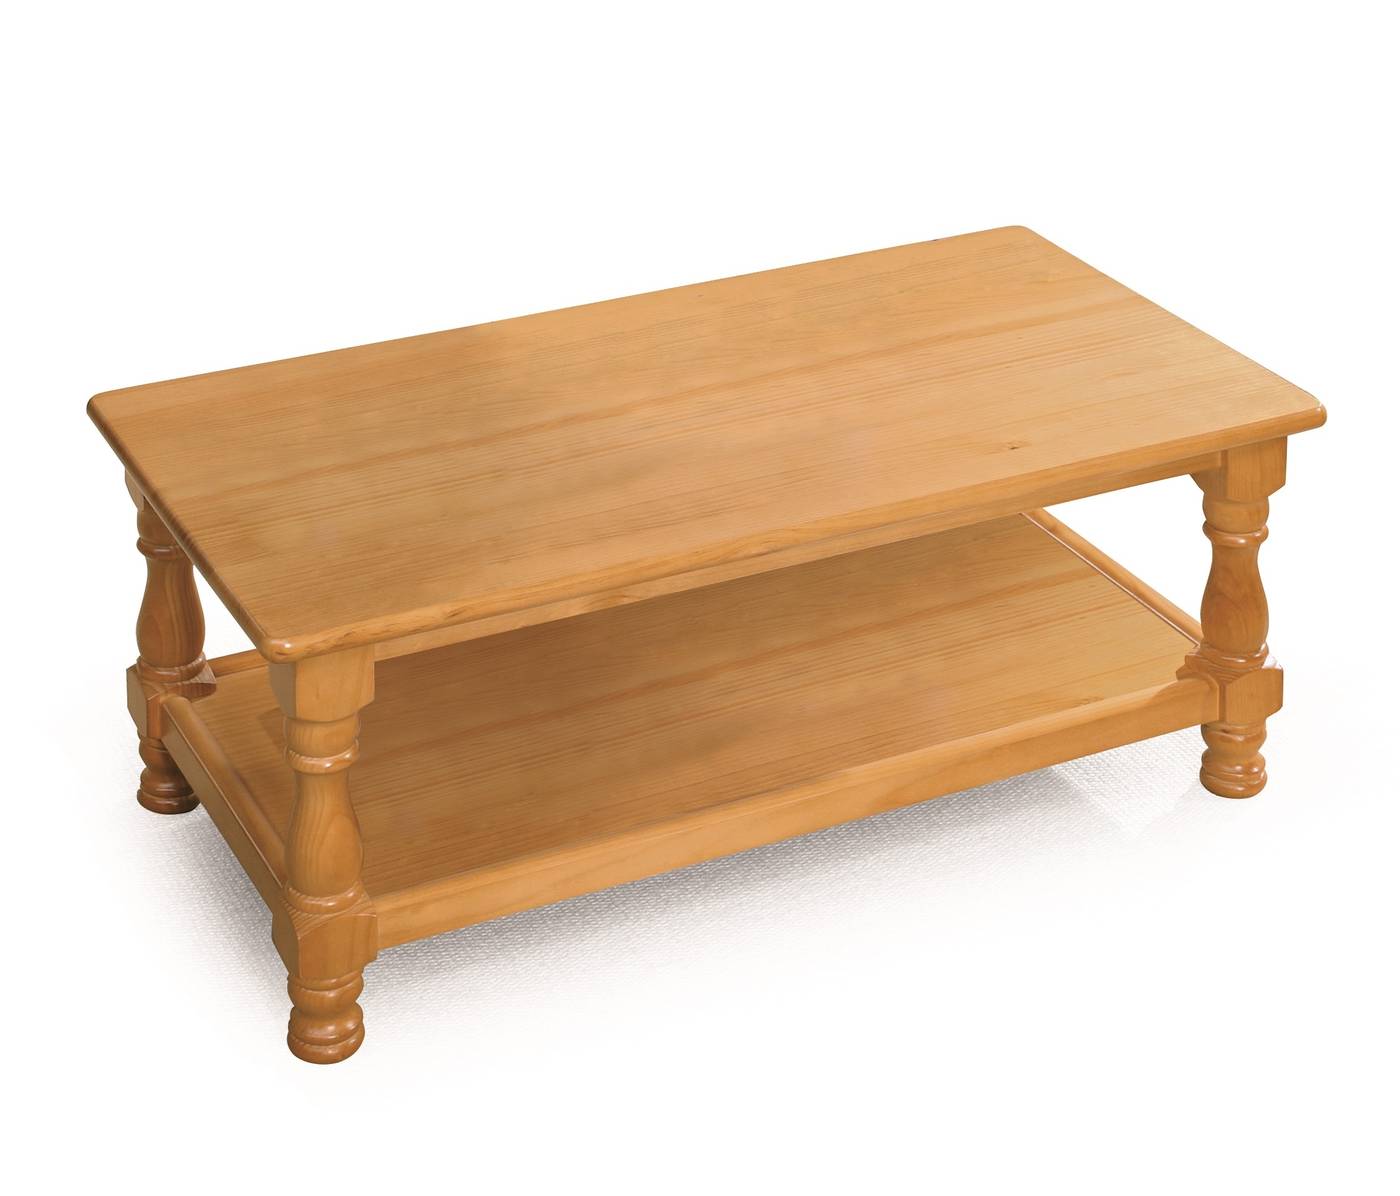 Mesa de centro rectangular de madera de pino, con revistero y tapa de madera. Disponible en varios colores.